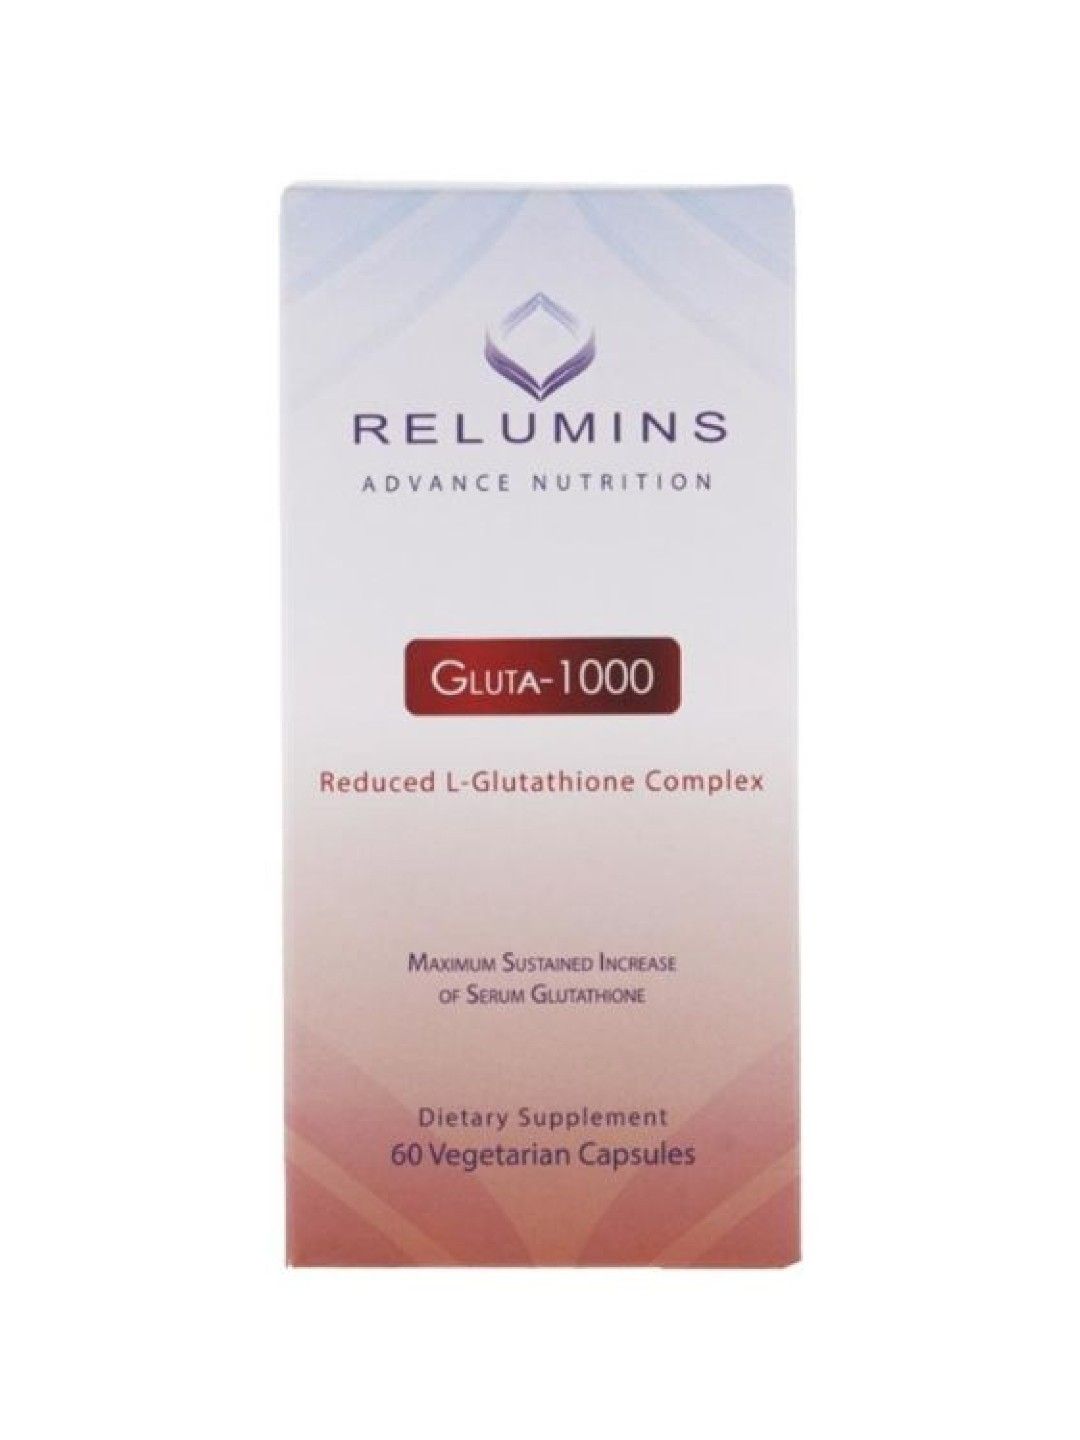 Relumins Advance Nutrition Gluta 1000 - Reduced L-Glutathione Complex (60 Capsules)